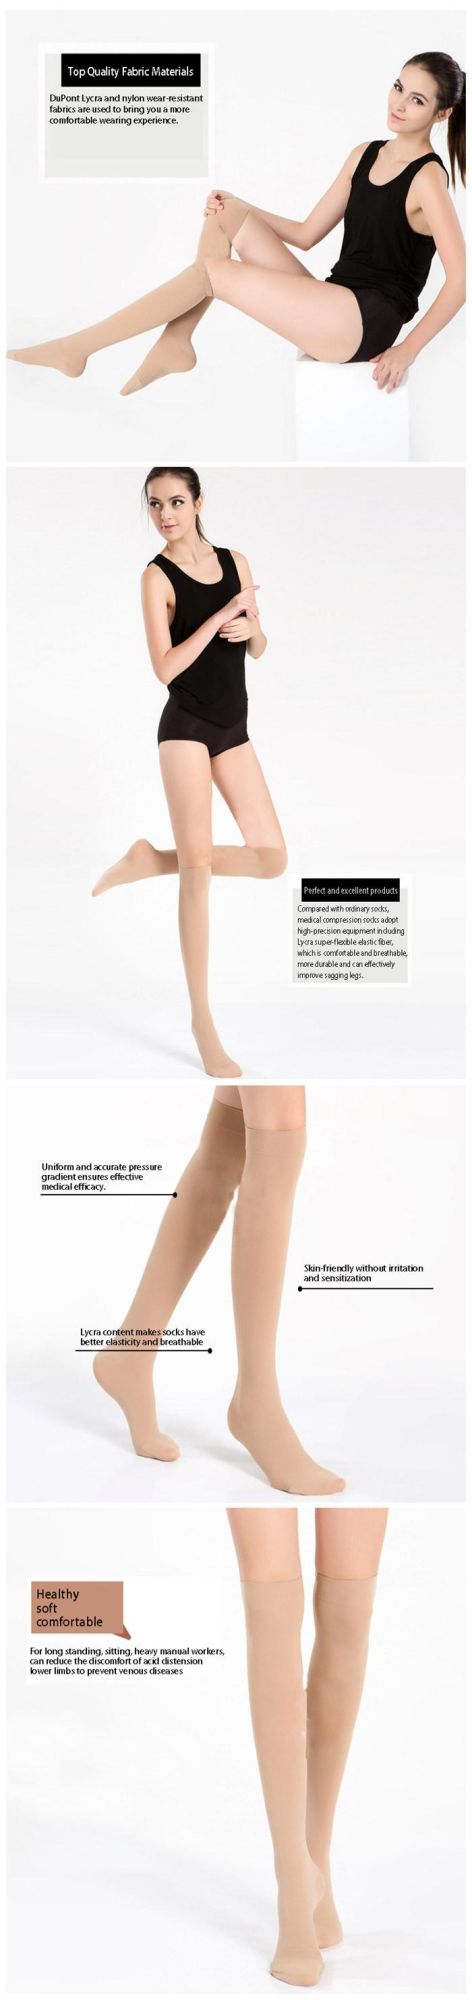 Medical Close Toe Knee High 34-46mmhg Varicose Vein Compression Stockings